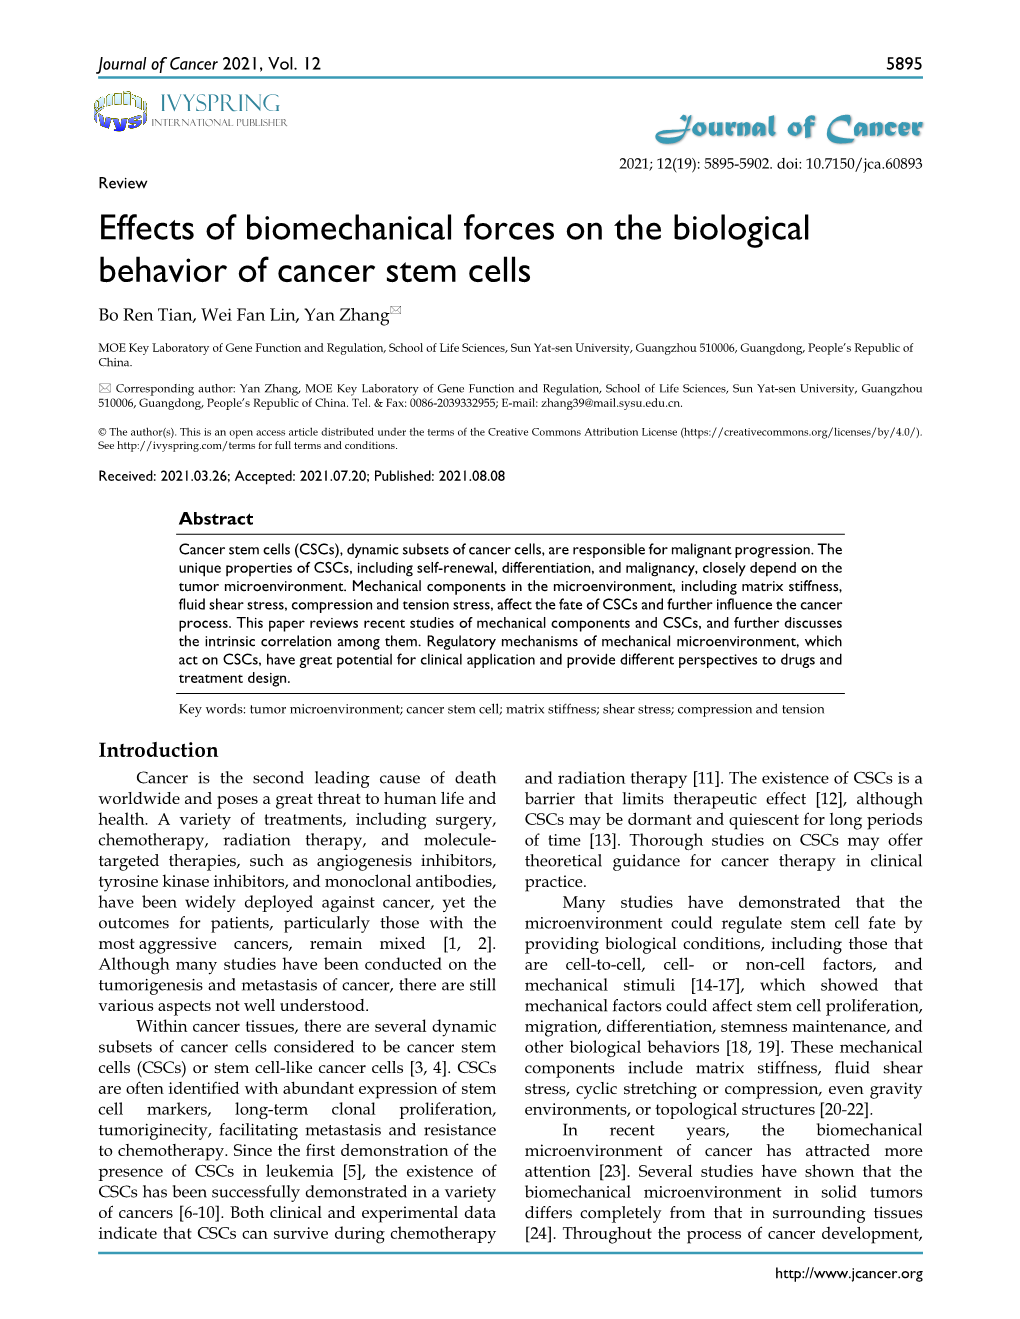 Effects of Biomechanical Forces on the Biological Behavior of Cancer Stem Cells Bo Ren Tian, Wei Fan Lin, Yan Zhang